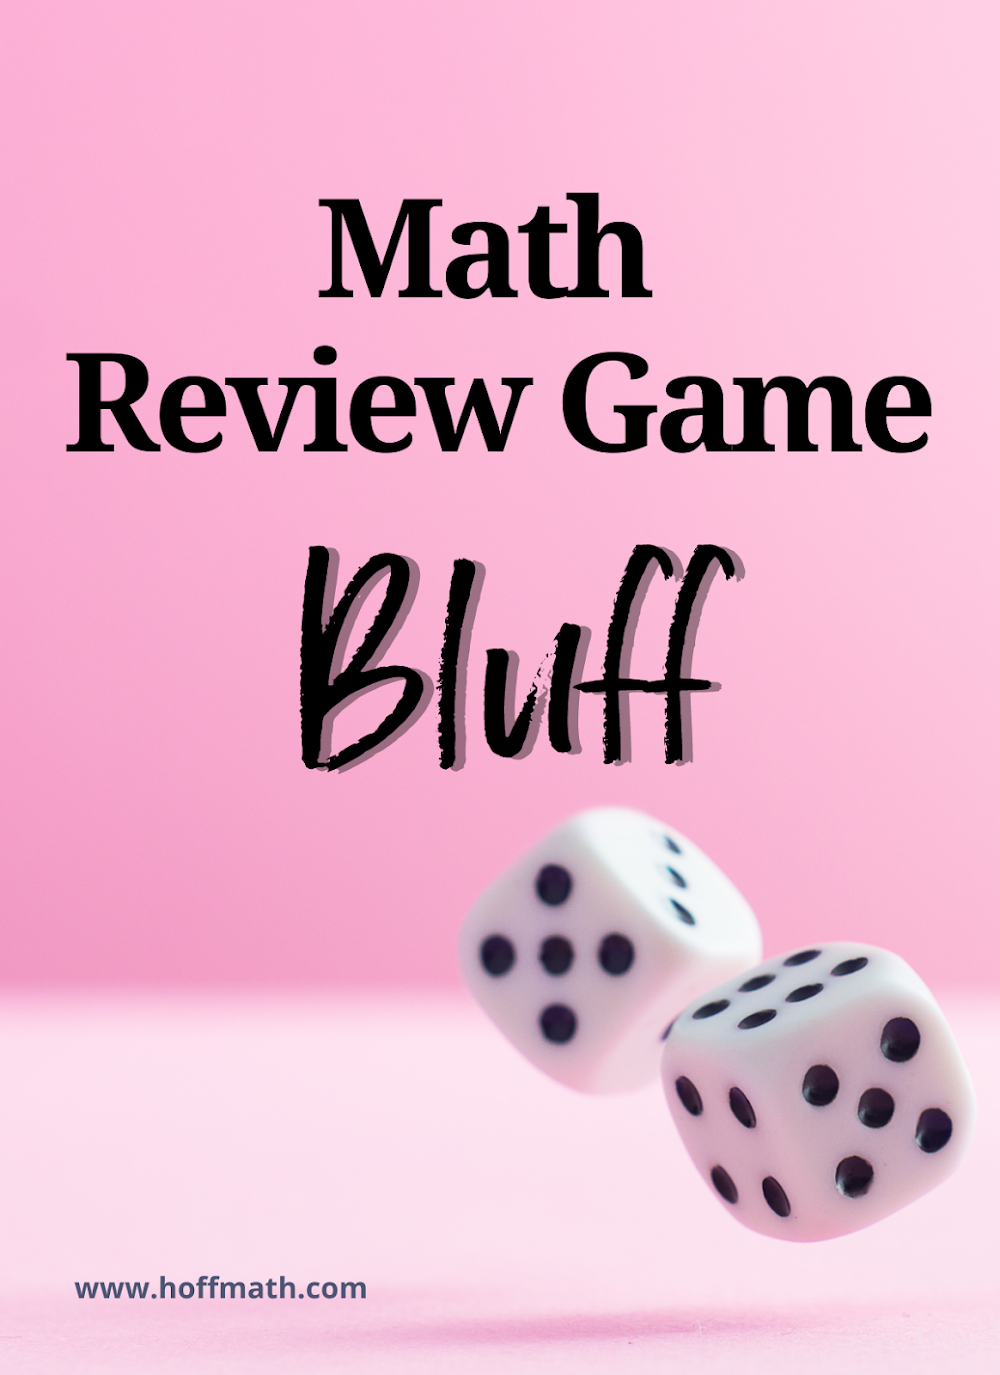 Math Review Game "Bluff"